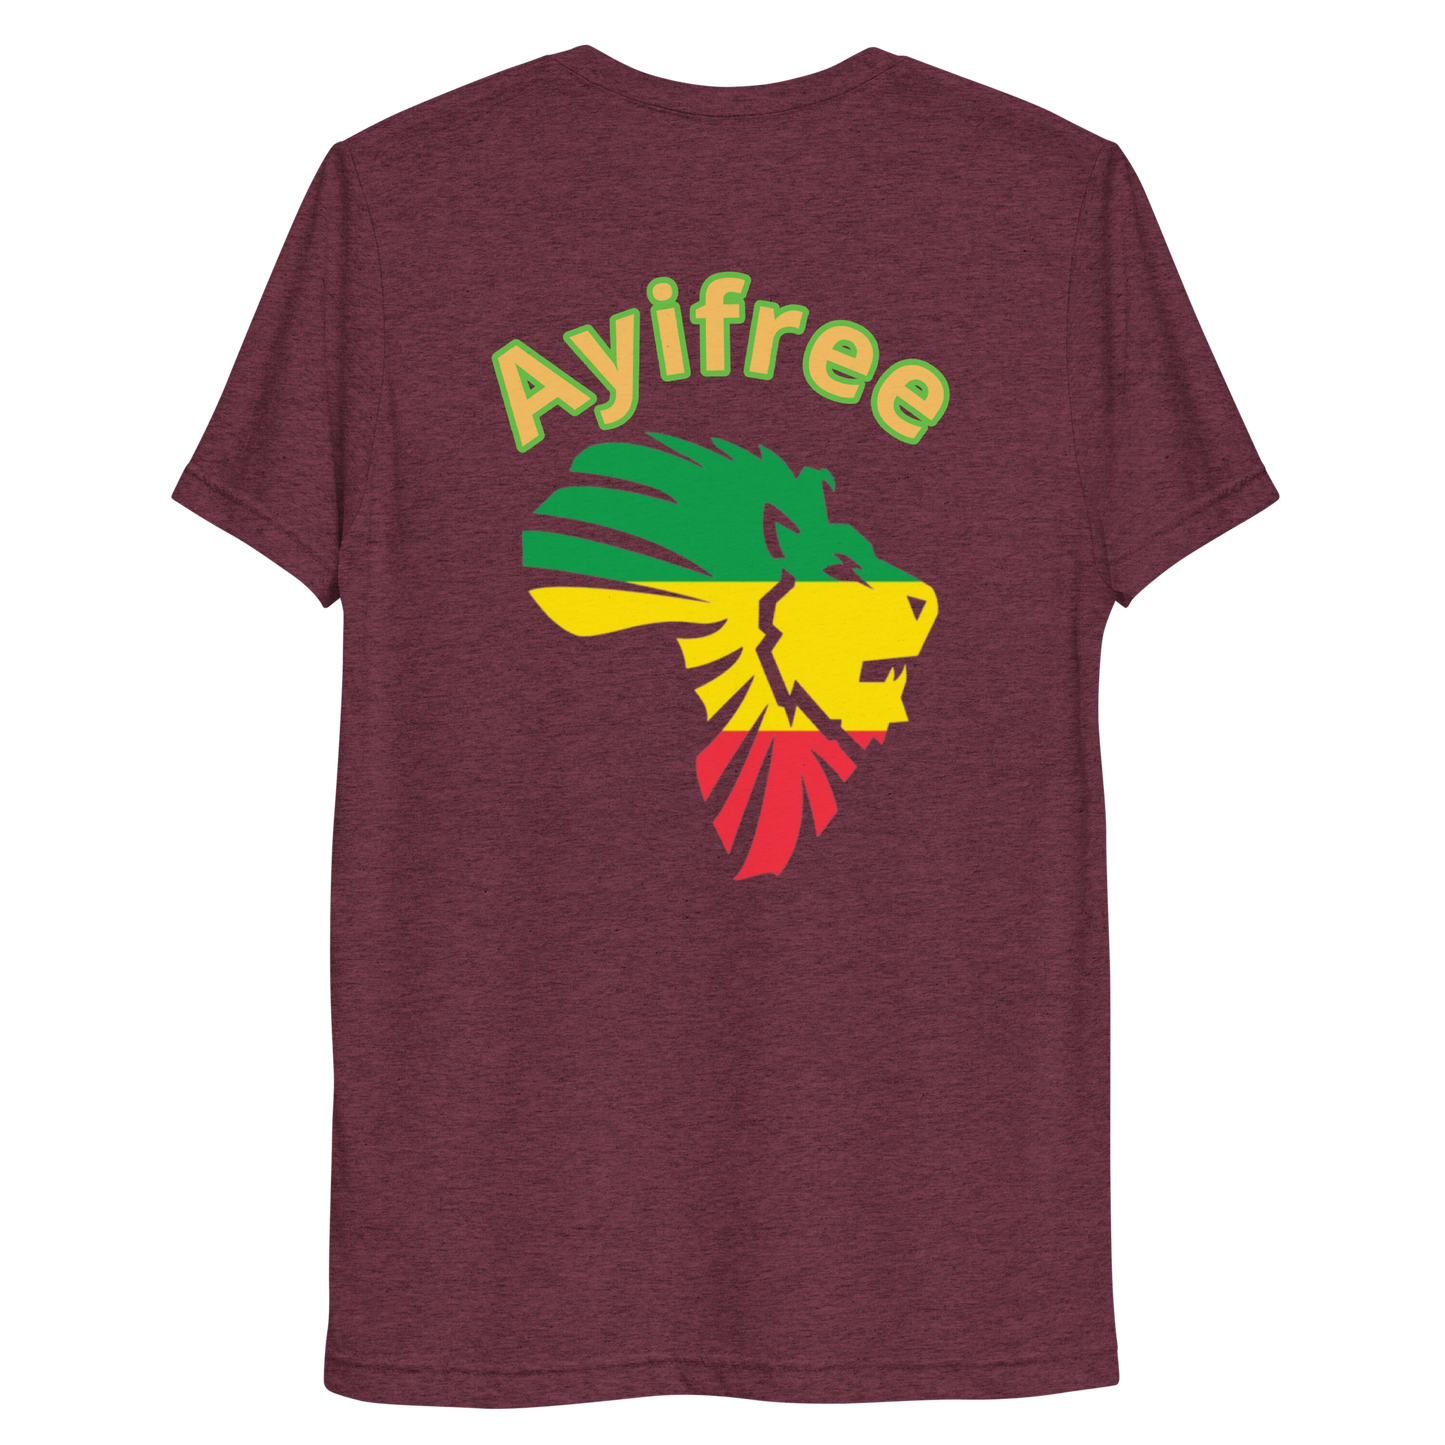 Short sleeve t-shirt ayifree 1804